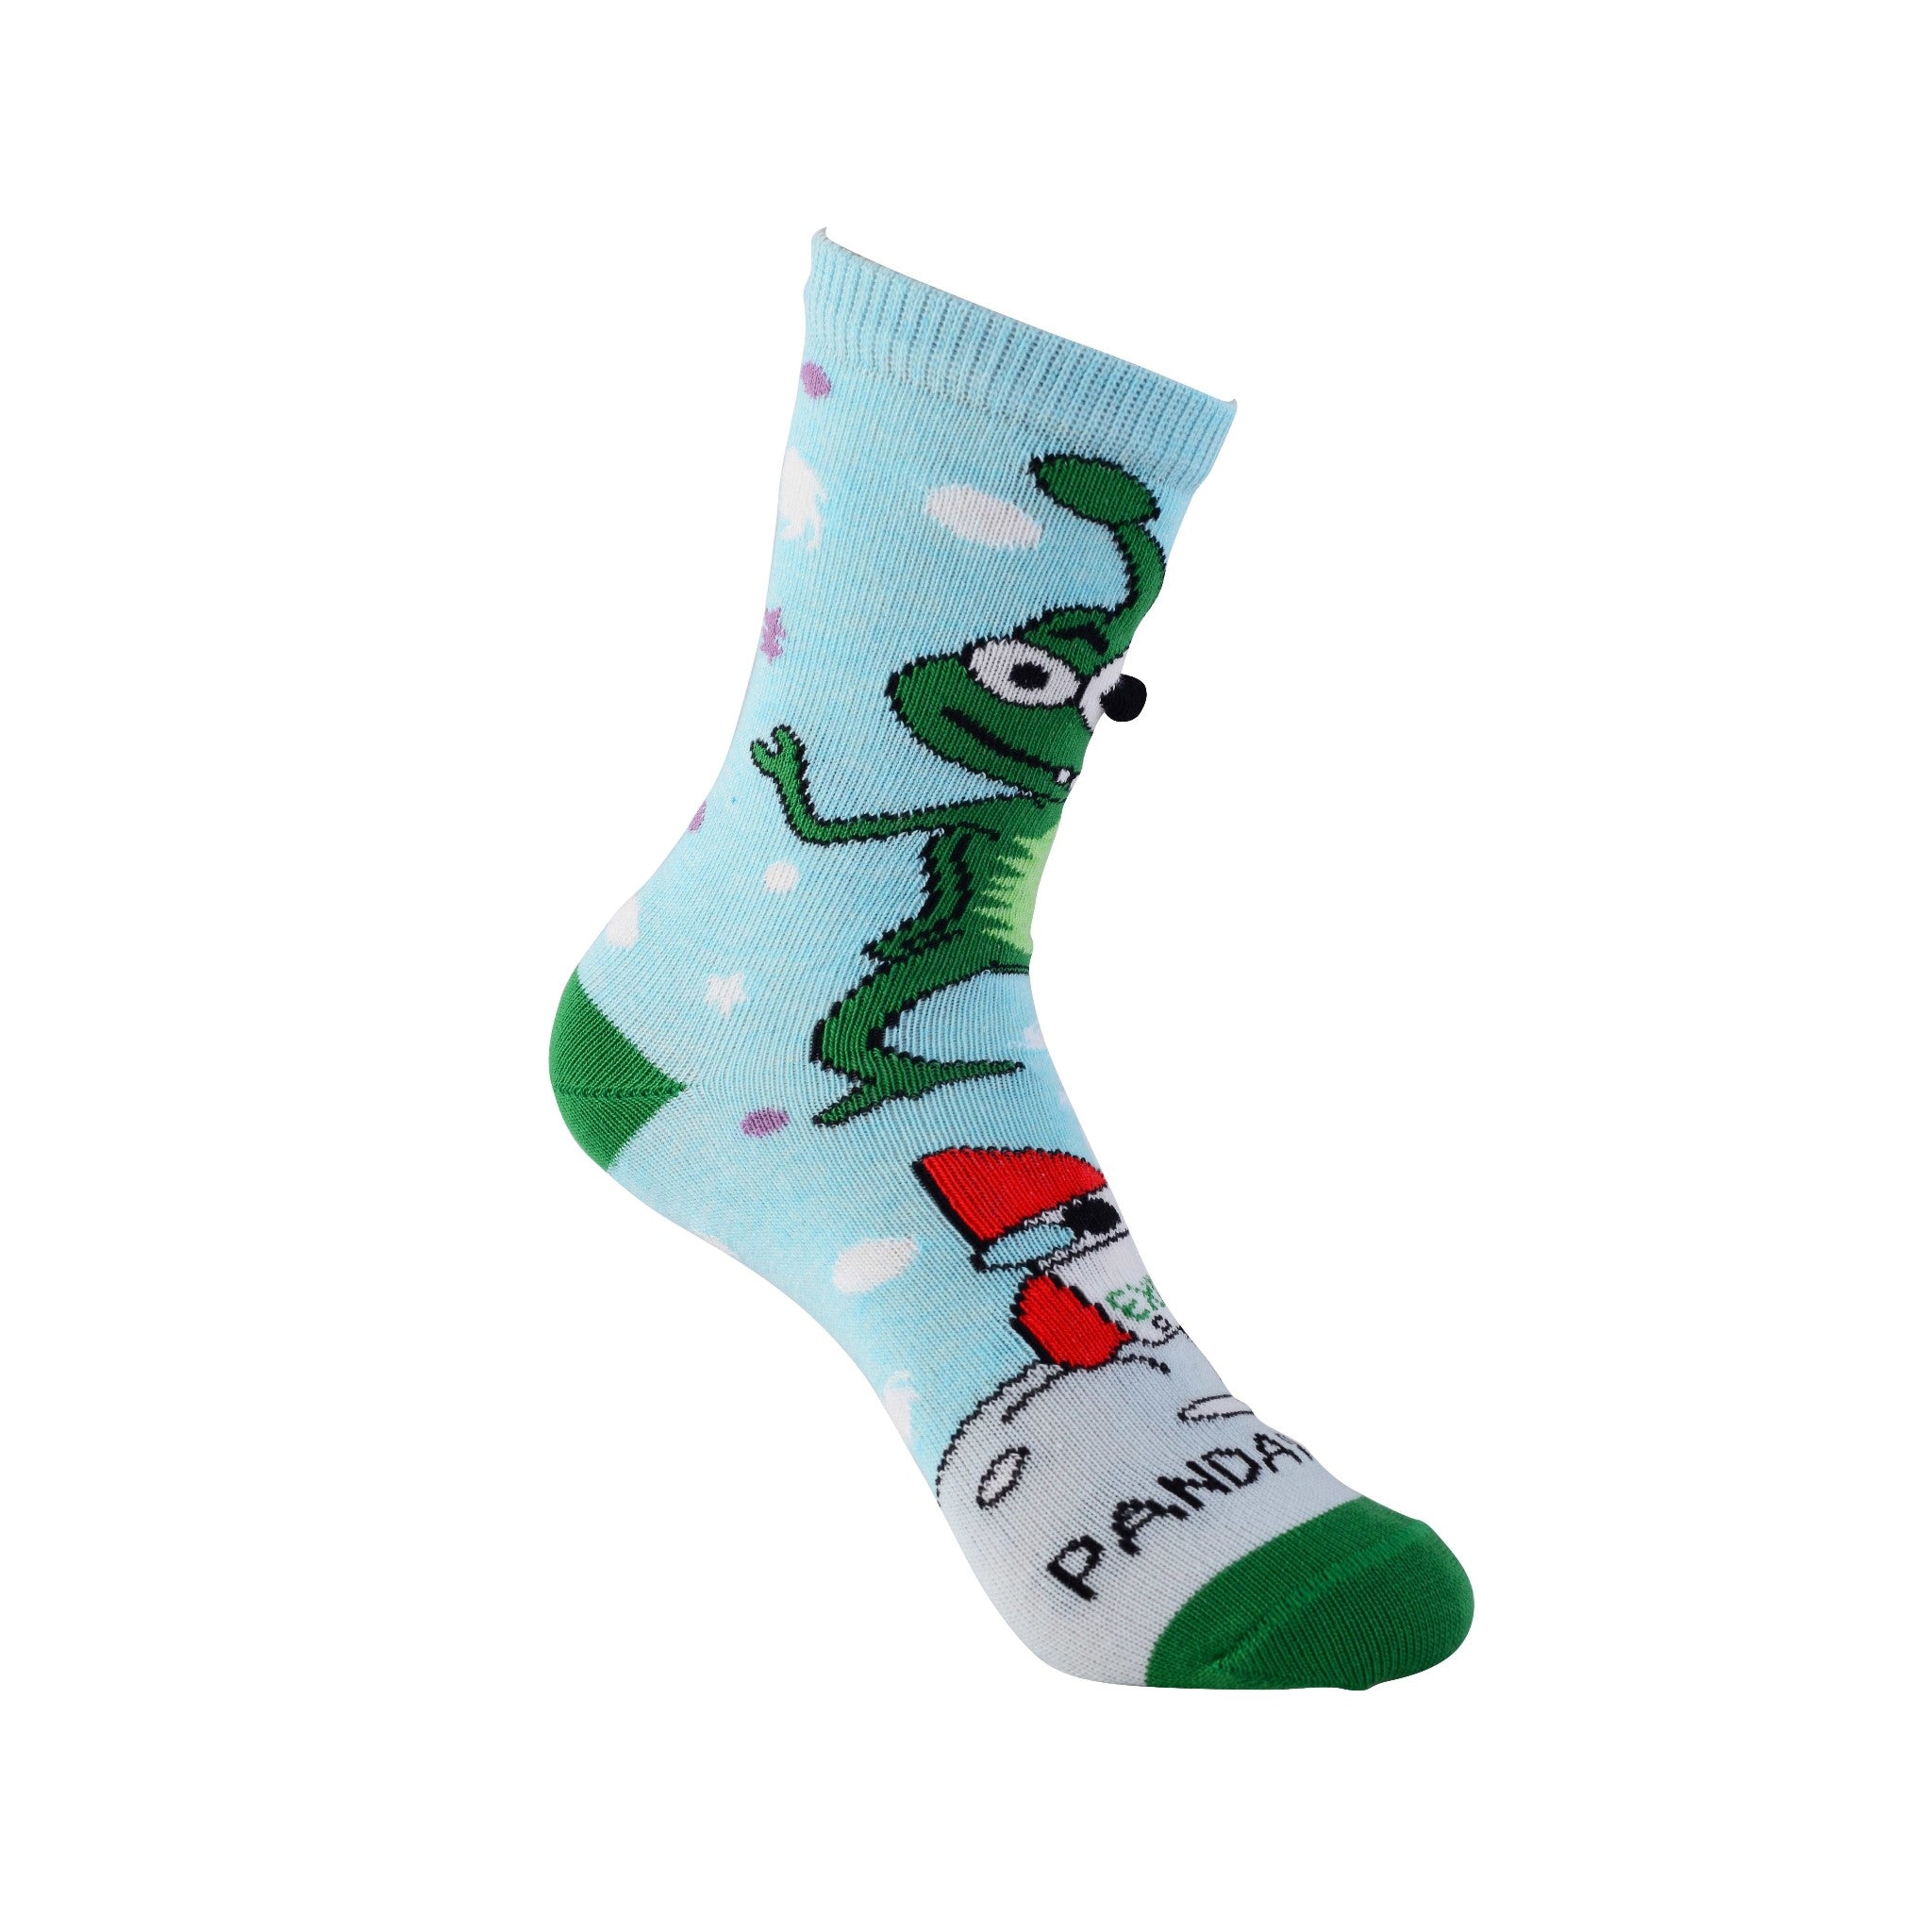 Gorgan the Alien Sock (Ages 3-5)